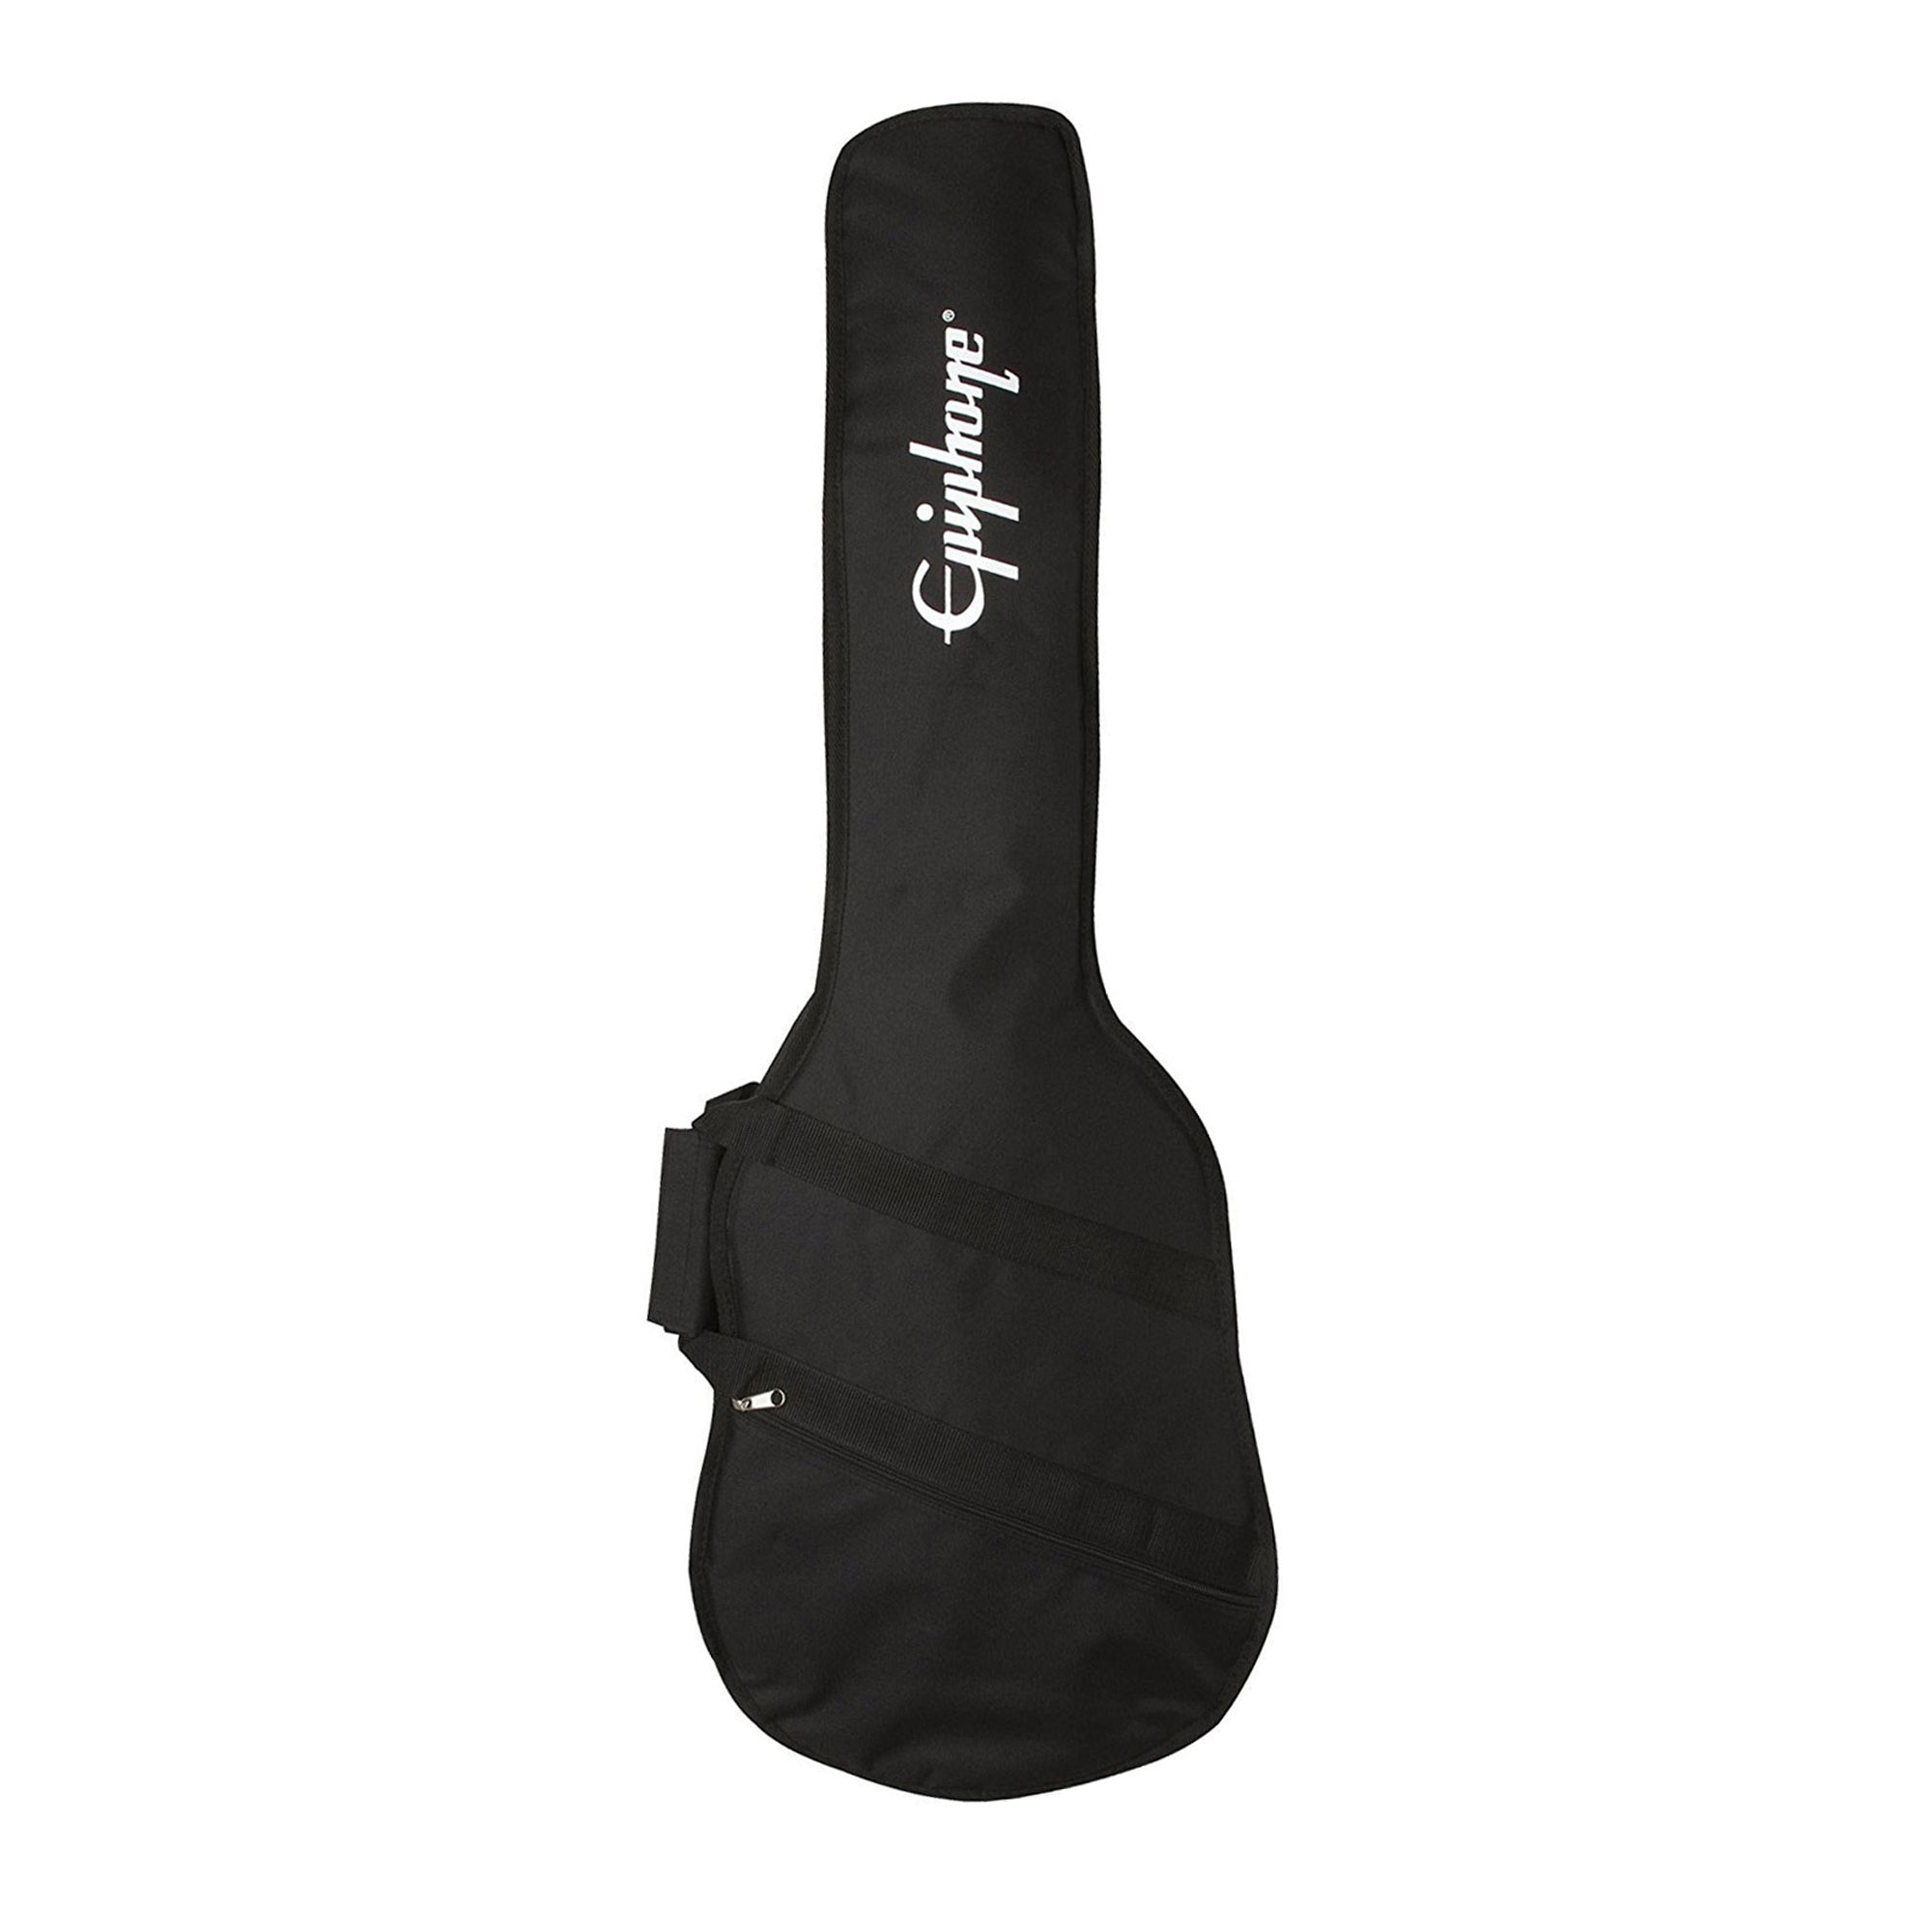 Epiphone Black 940-XEGIG Electric Guitar Bag